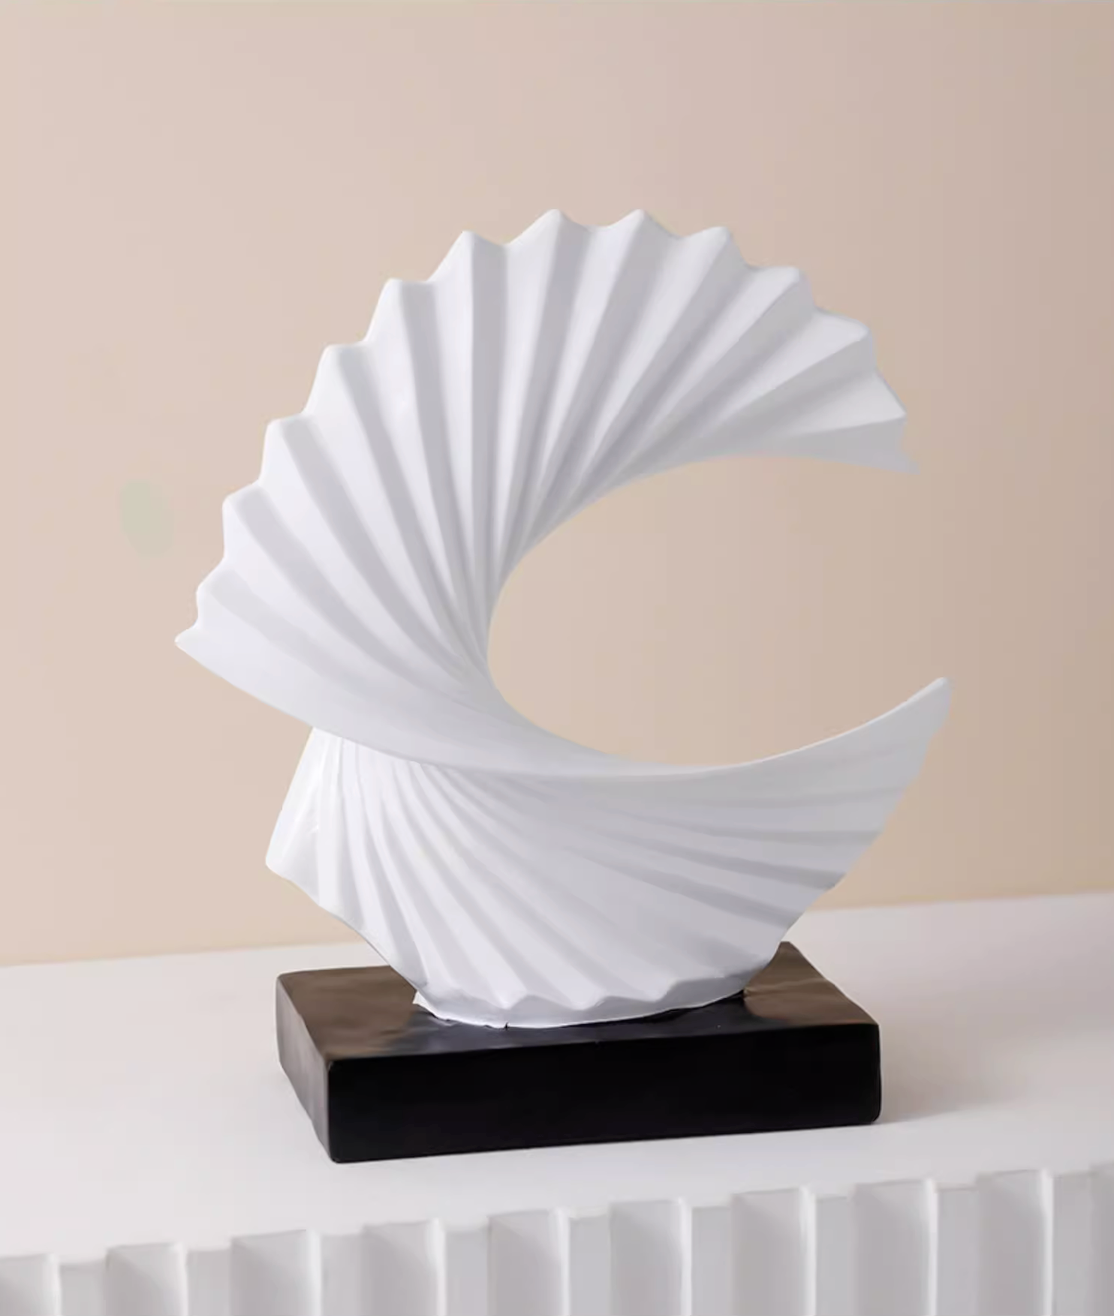 Ocean Wave Resin Statue Table Art Elegant Decoration